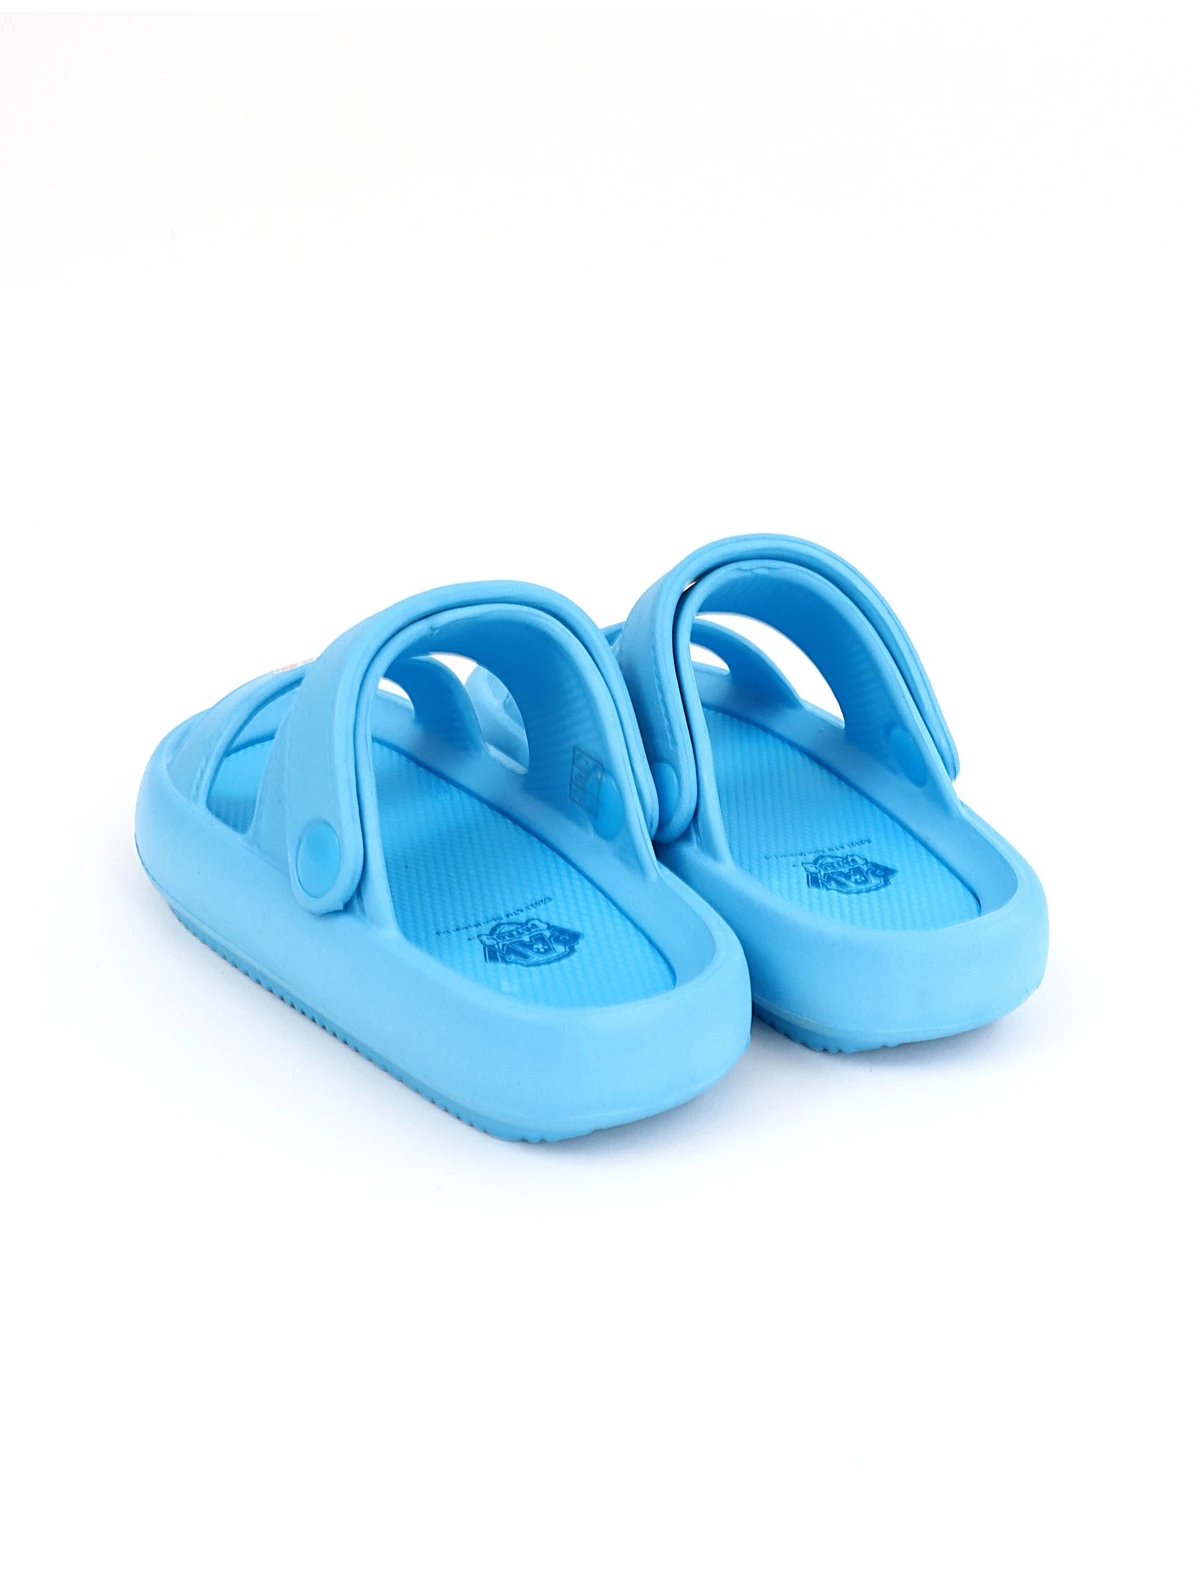 Sandale PAW PATROL blue